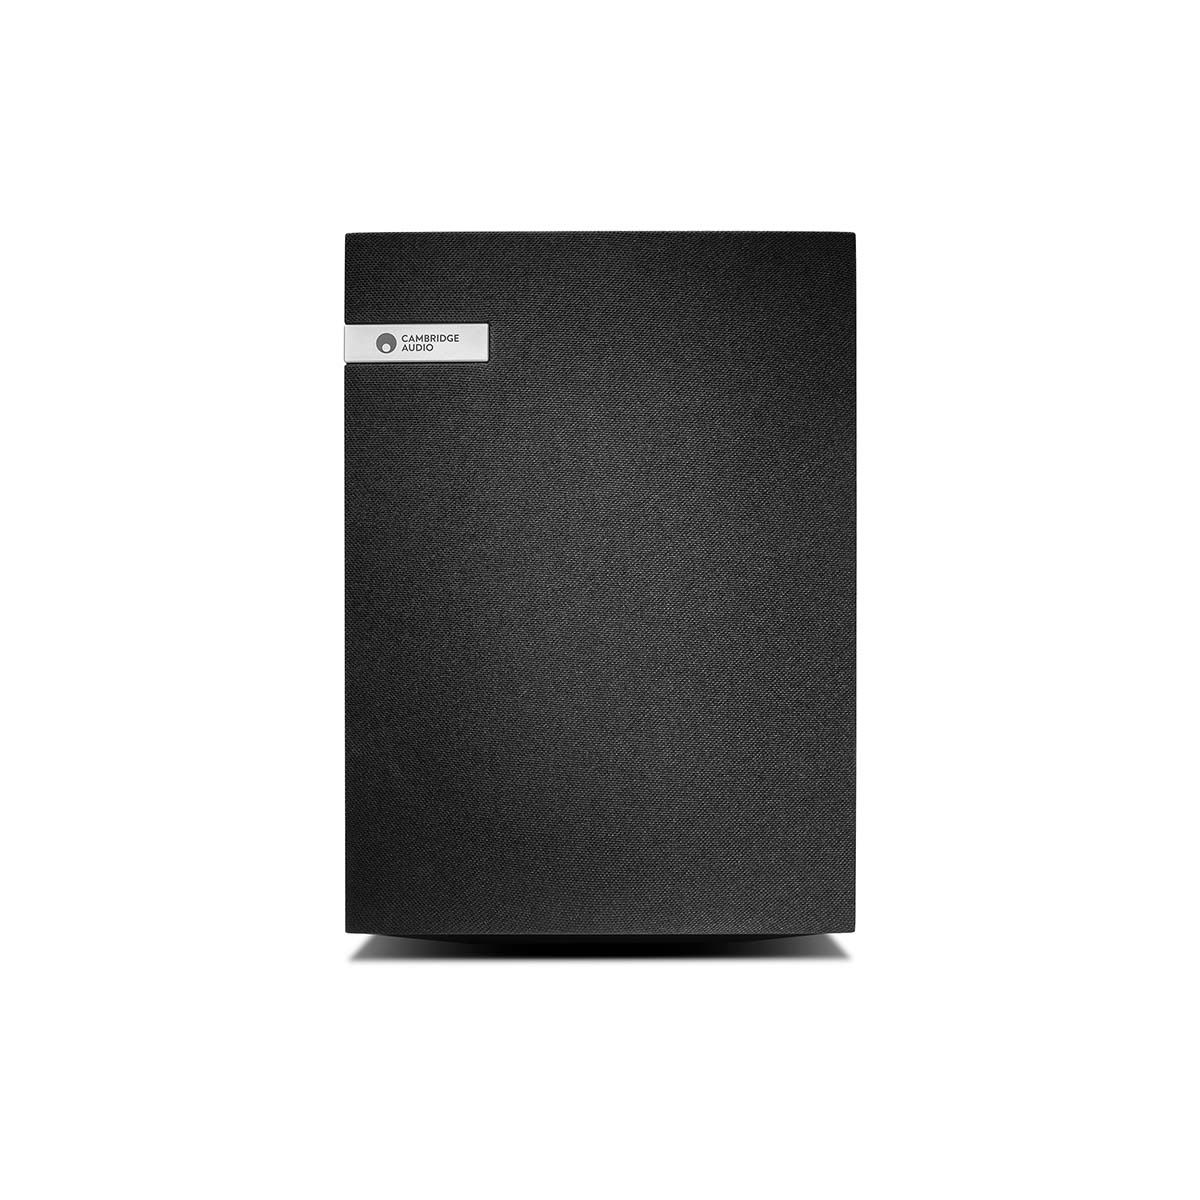 Cambridge Audio EVO S Bookshelf Speakers, black, front view with grille